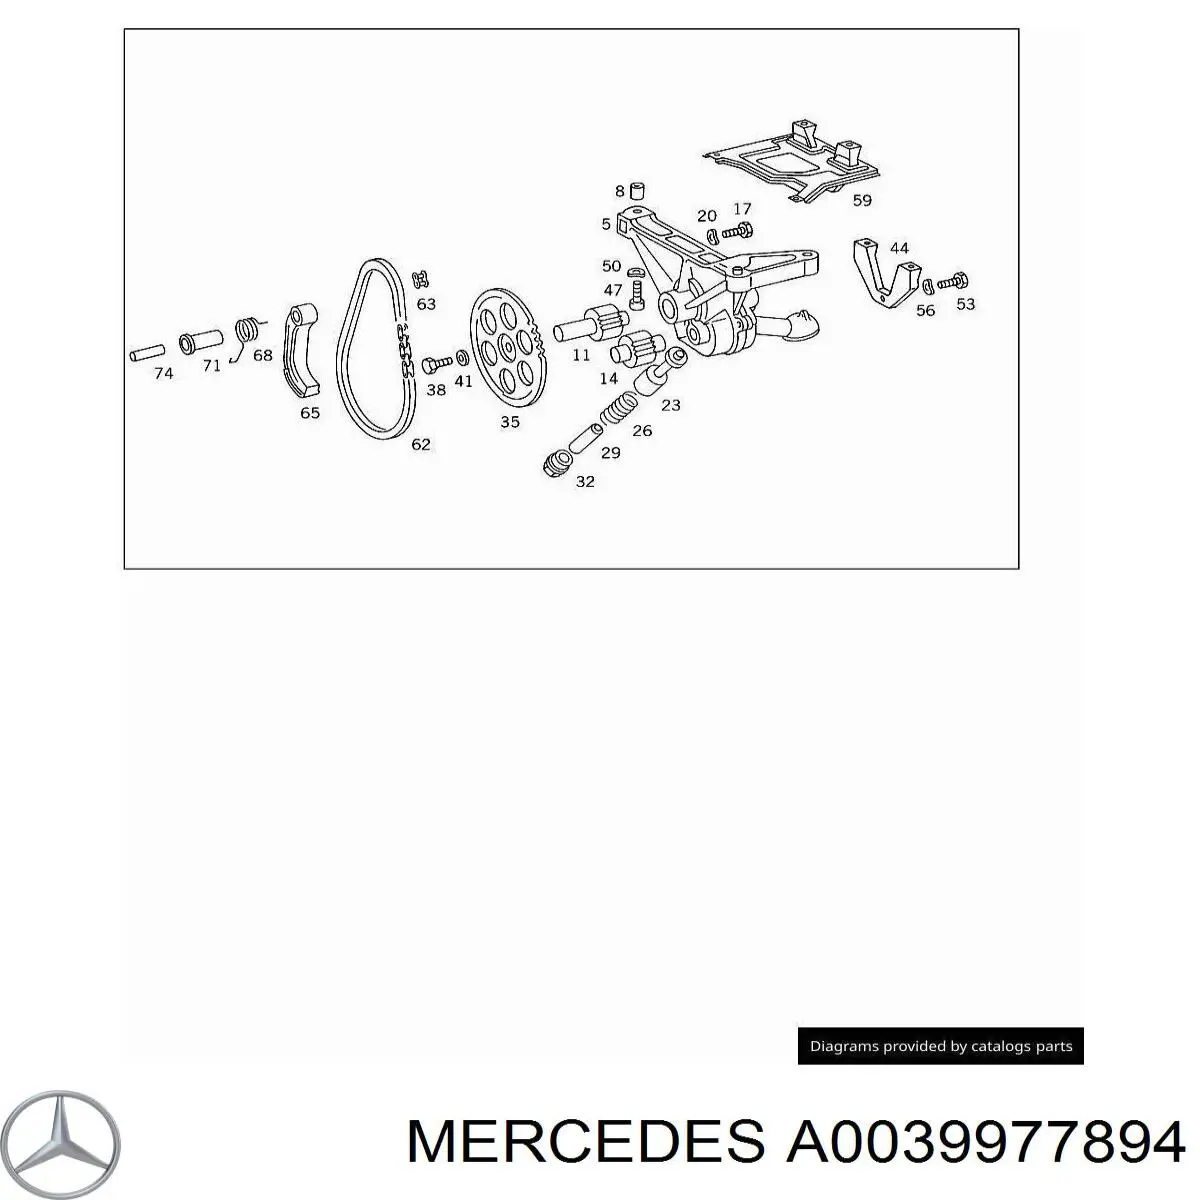 A0039977894 Mercedes цепь масляного насоса